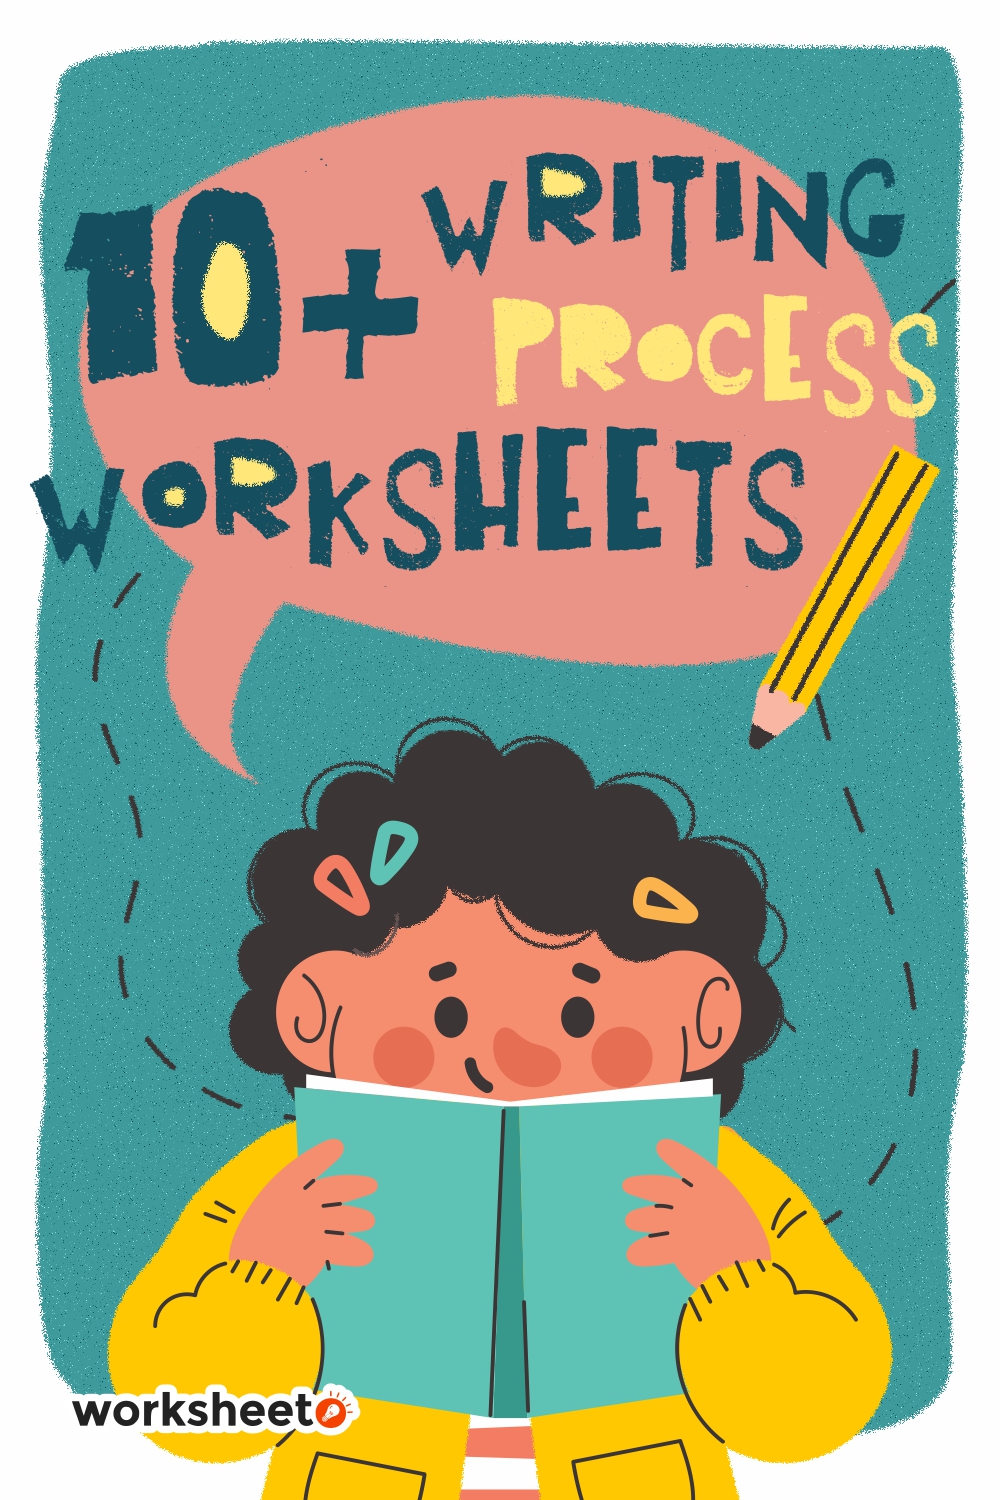 Writing Process Worksheets